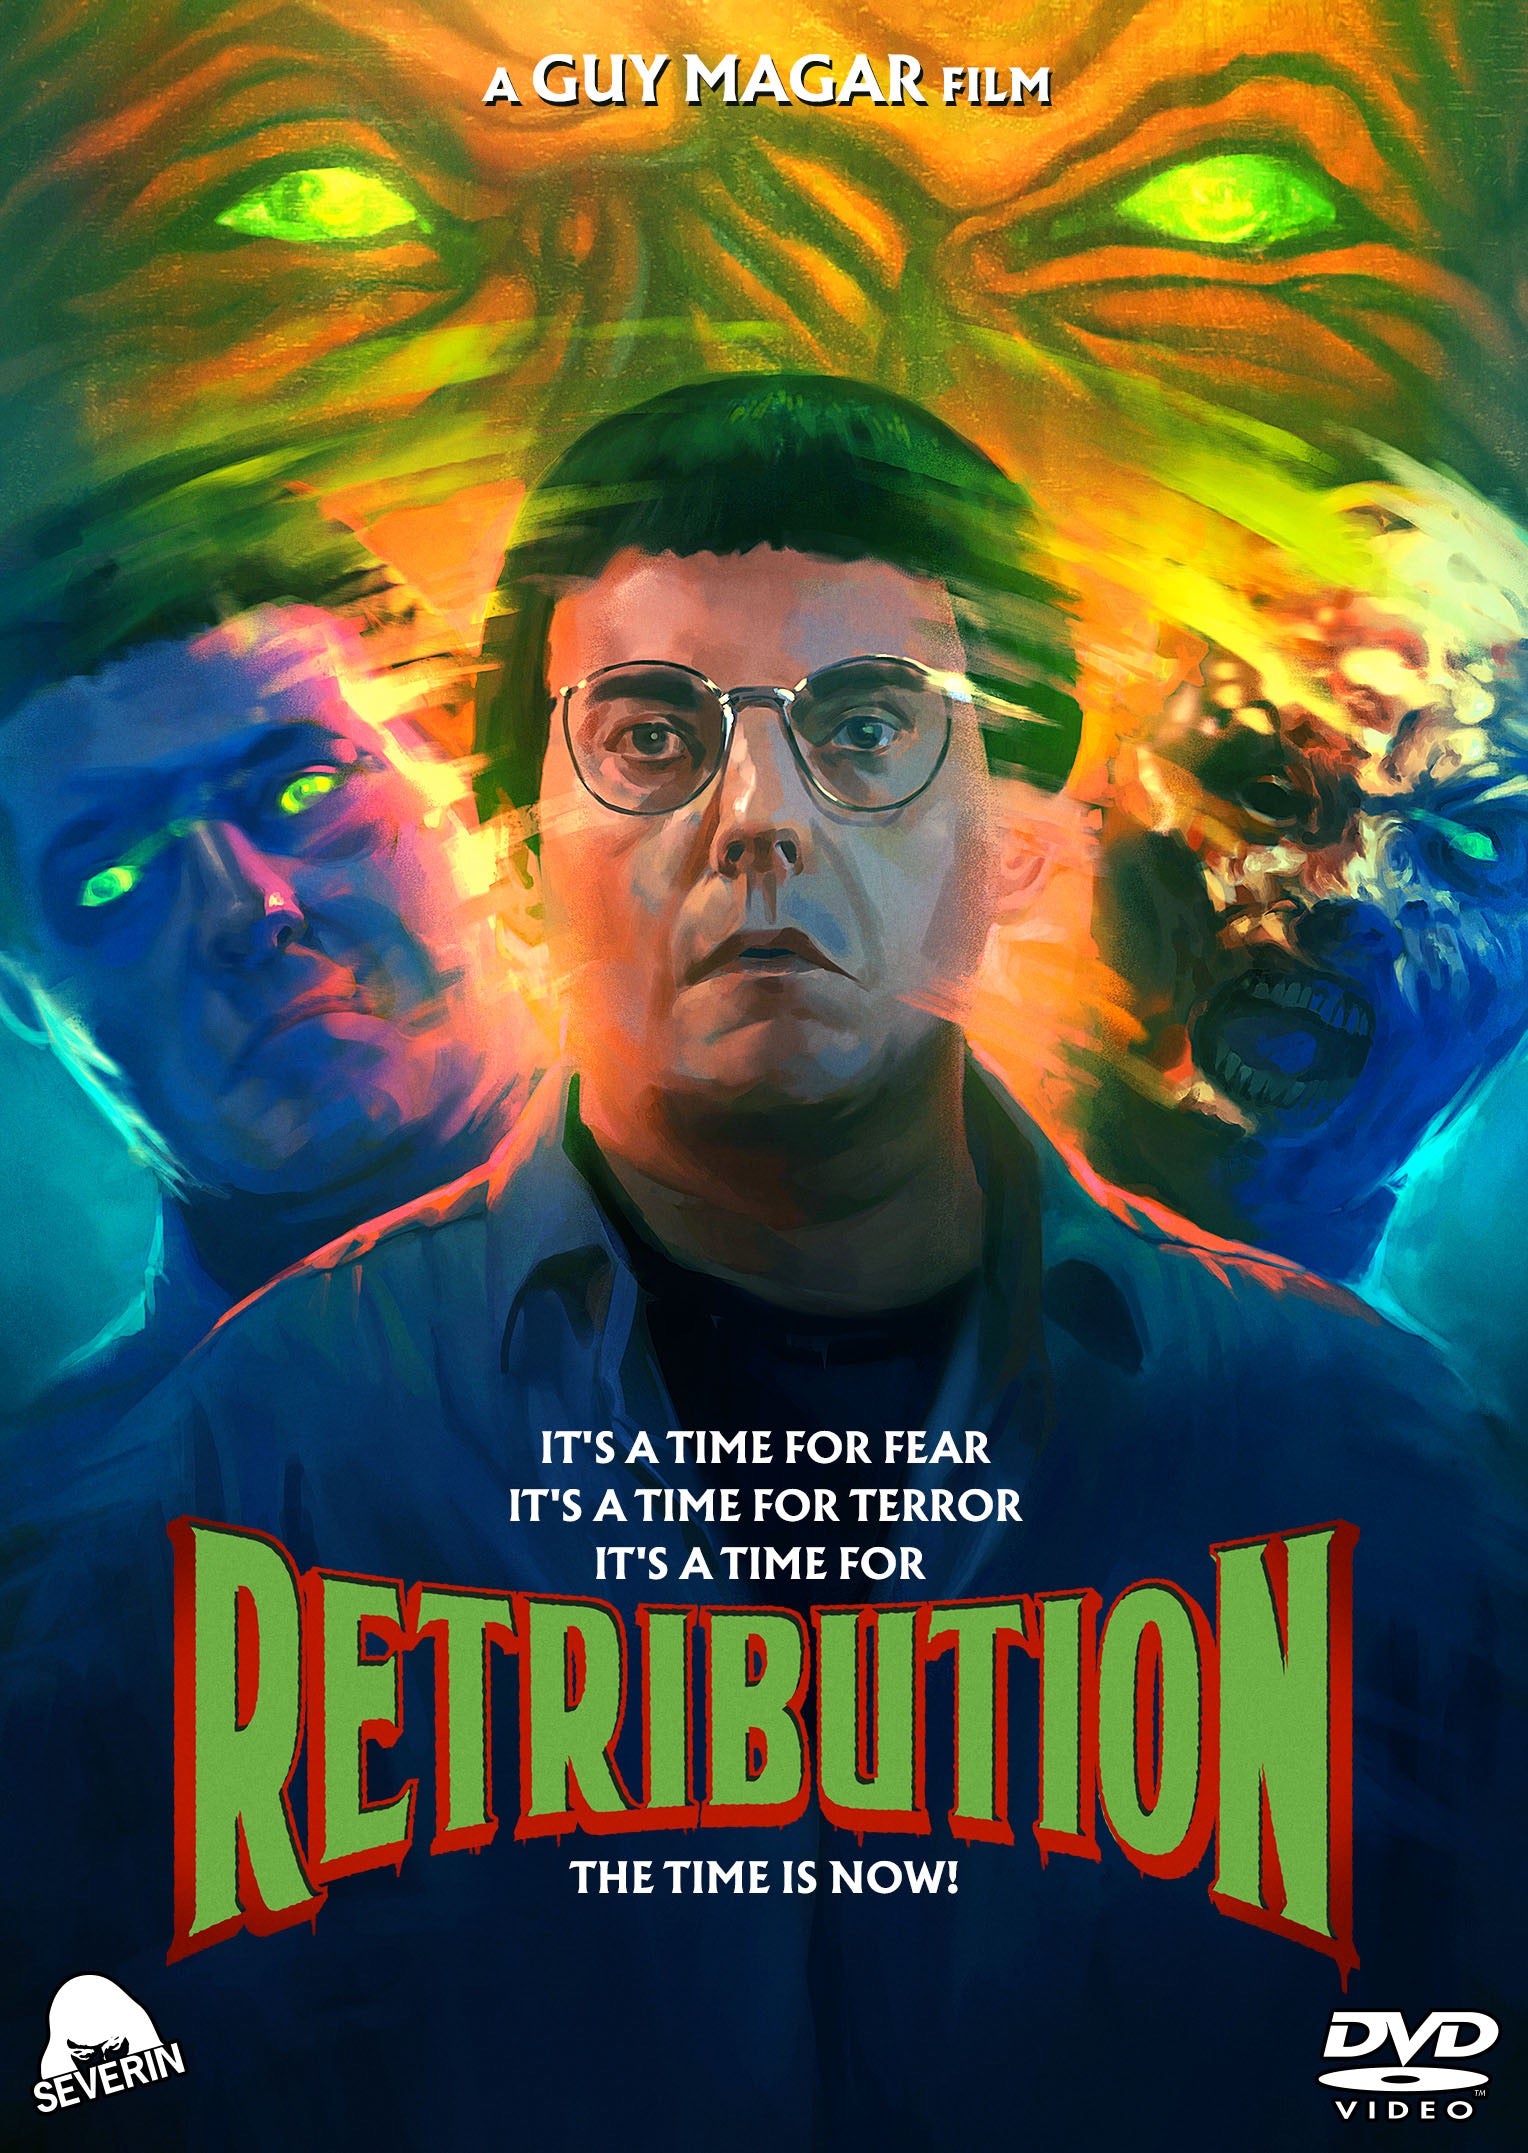 RETRIBUTION DVD